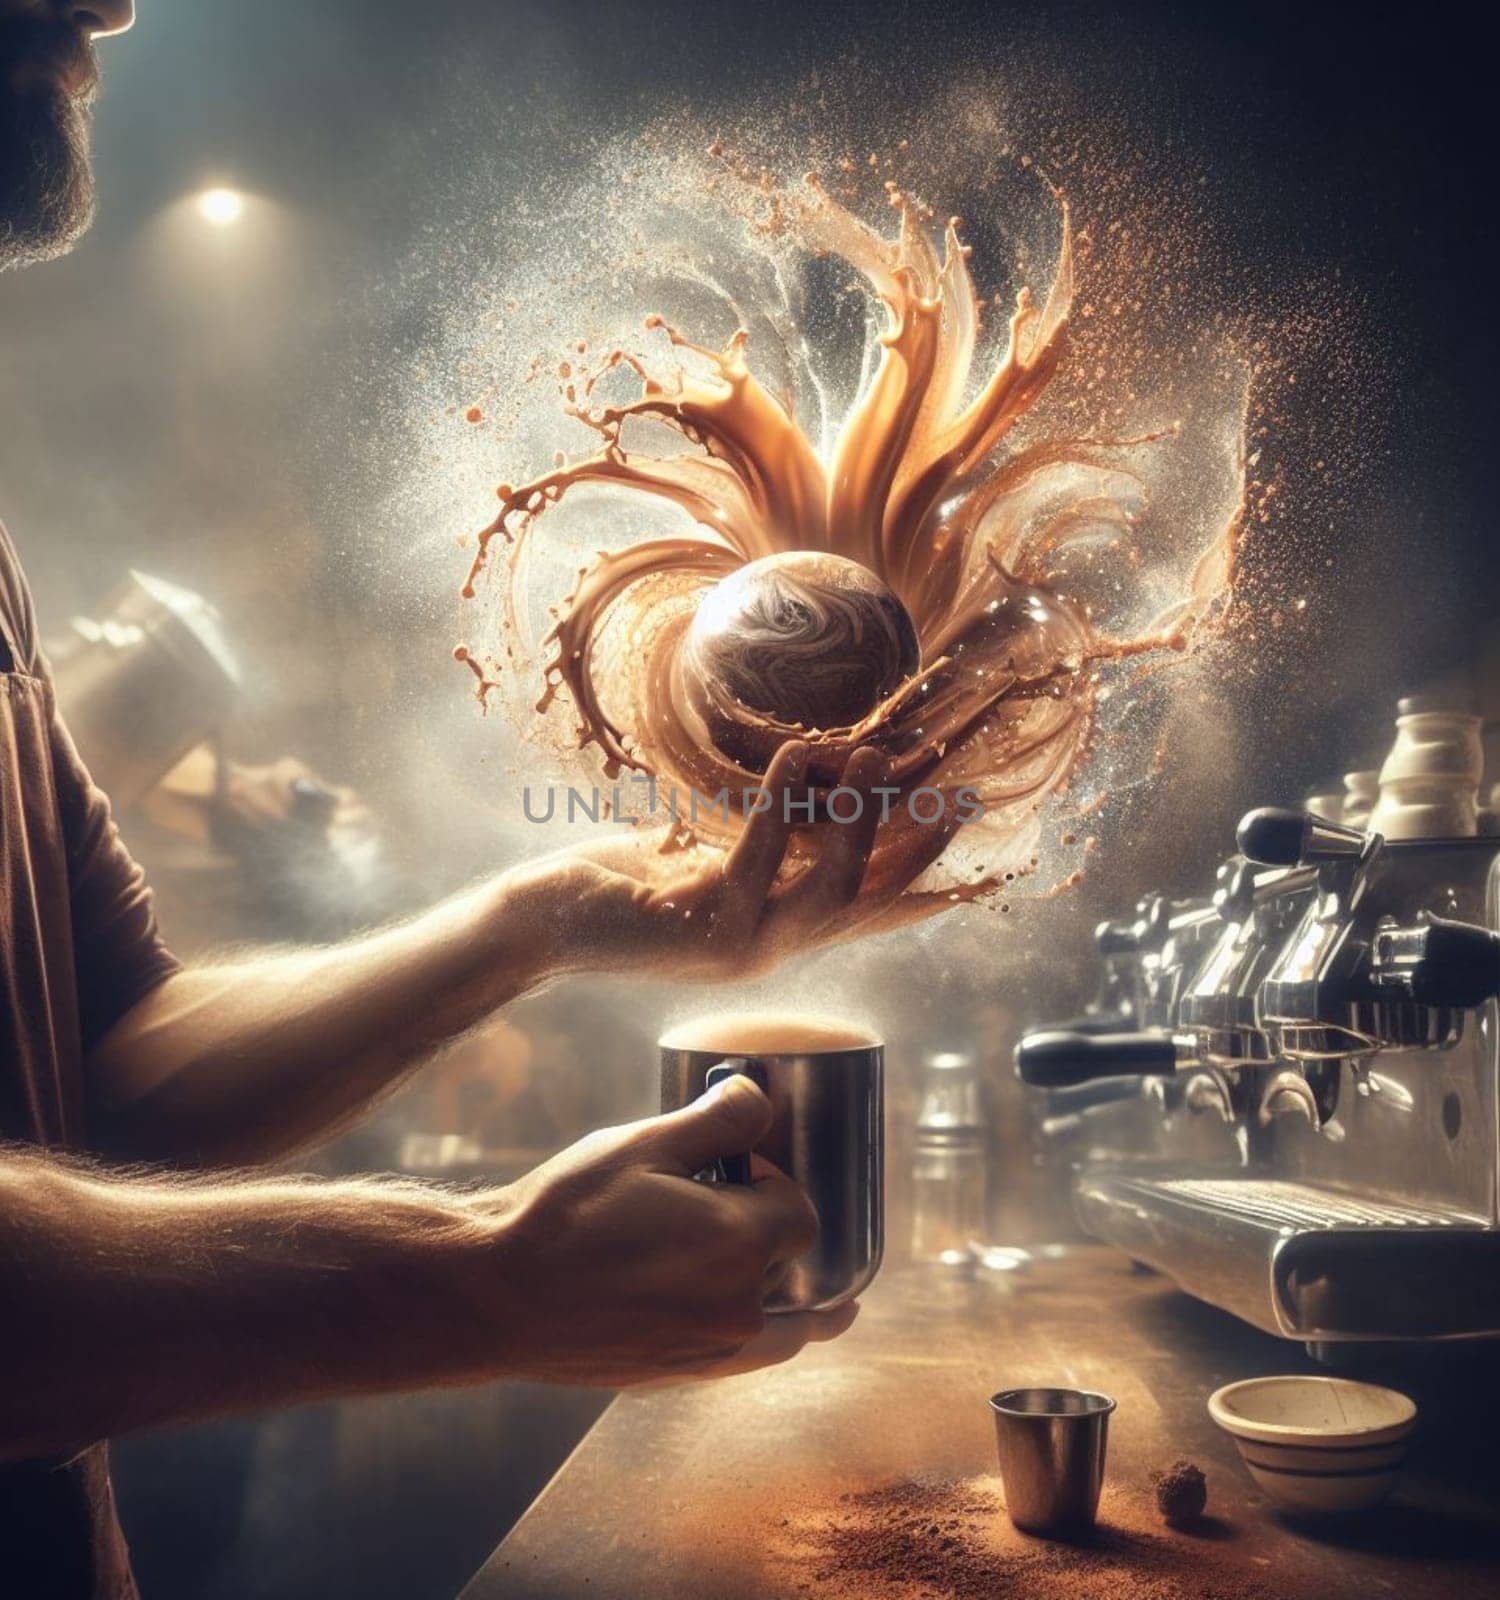 make latte art golden cappuccino at bar expert barista splashing cream fantasy illustration render art generated